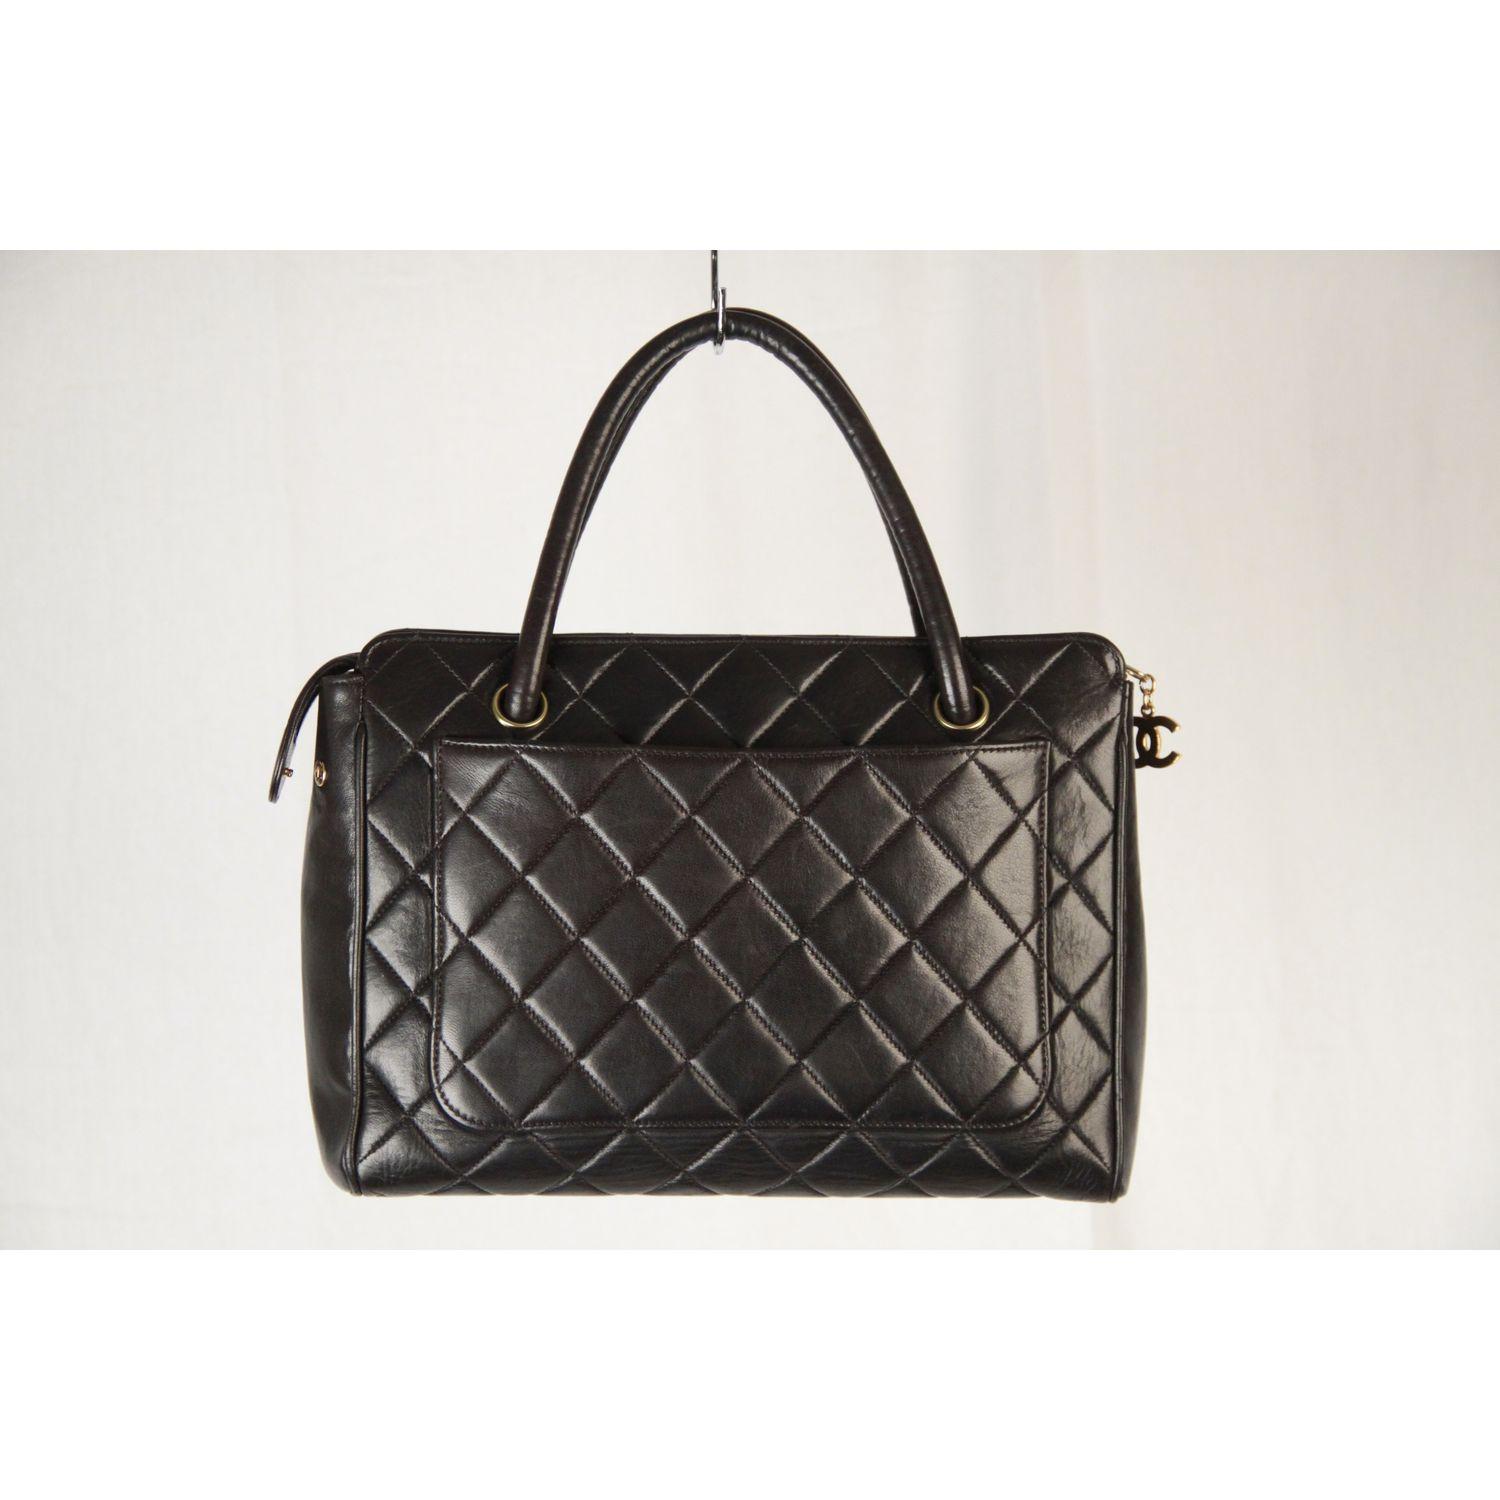 Chanel Vintage Black Quilted Handbag Satchel with Exterior Pockets 2